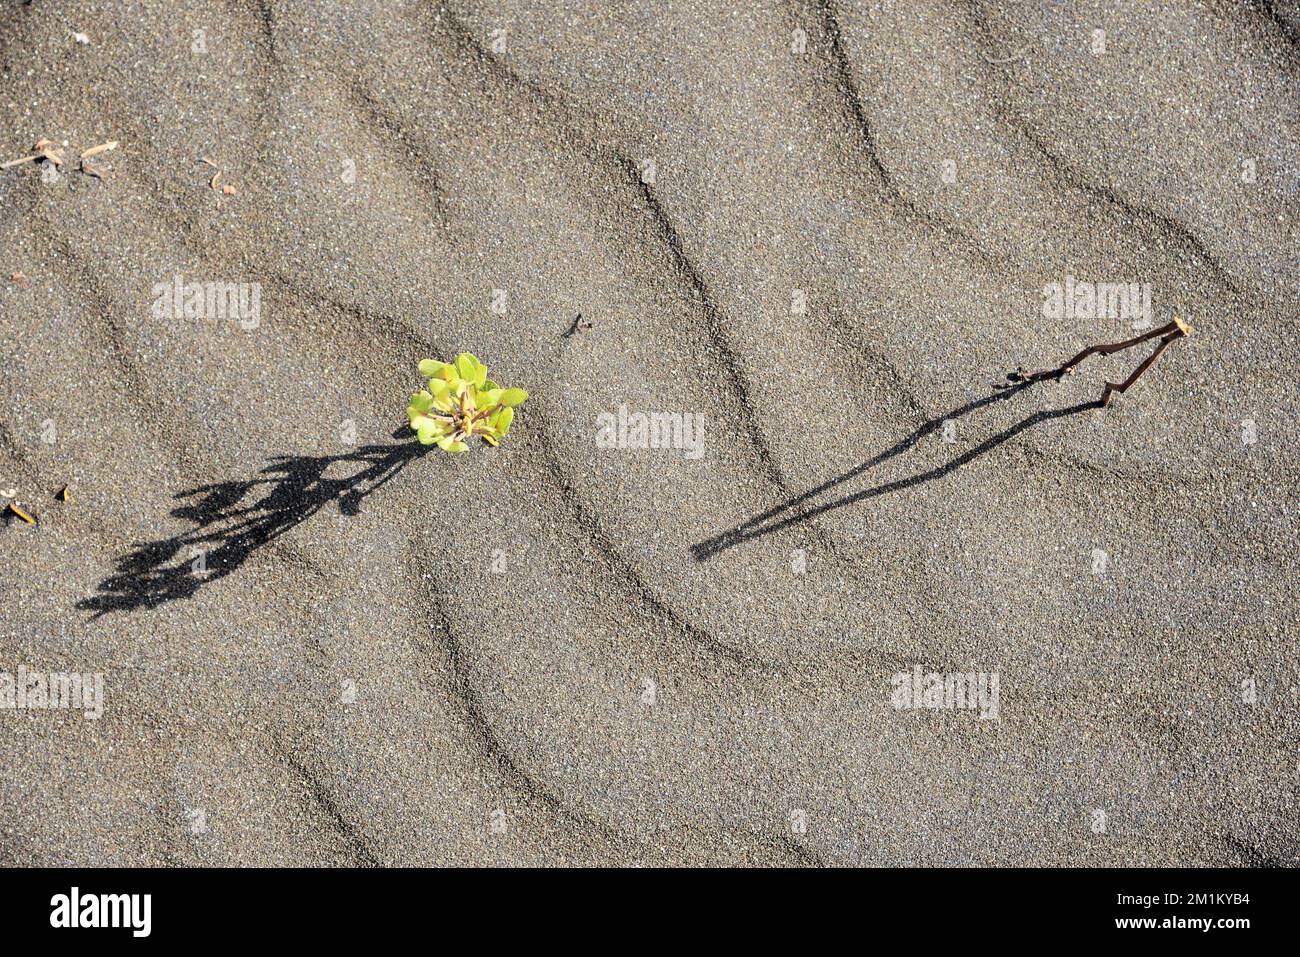 Green plant on beach, Survada beach, Valsad, Gujarat, India, Asia Stock Photo